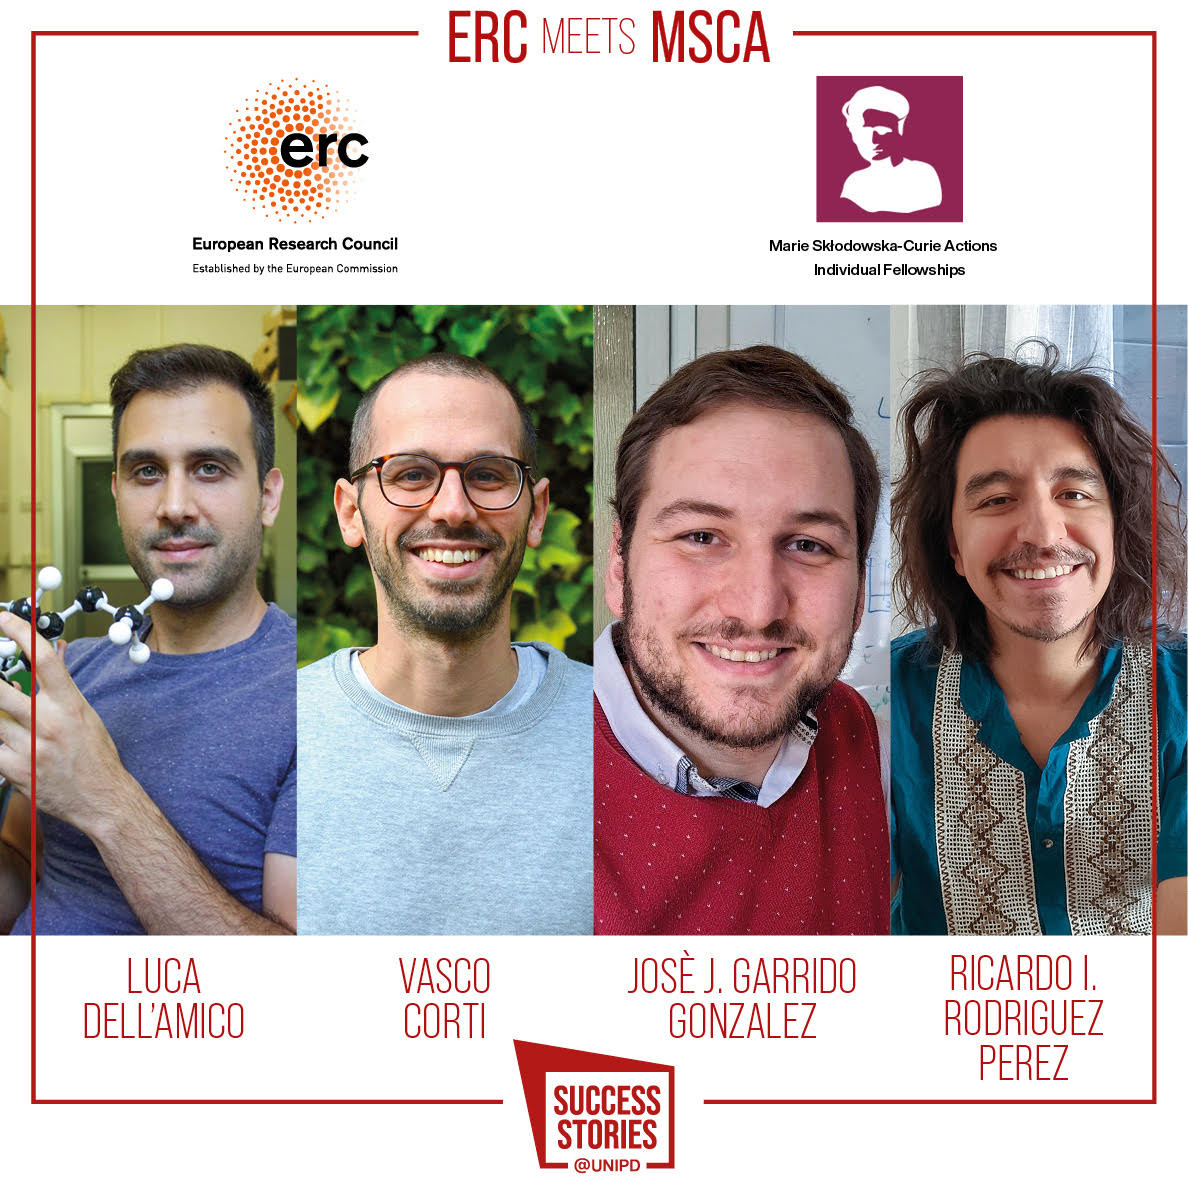 ERC meets MSCA: Luca Dell’Amico and Vasco Corti, José Javier Garrido Gonzalez, Ricardo Rodriguez Perez